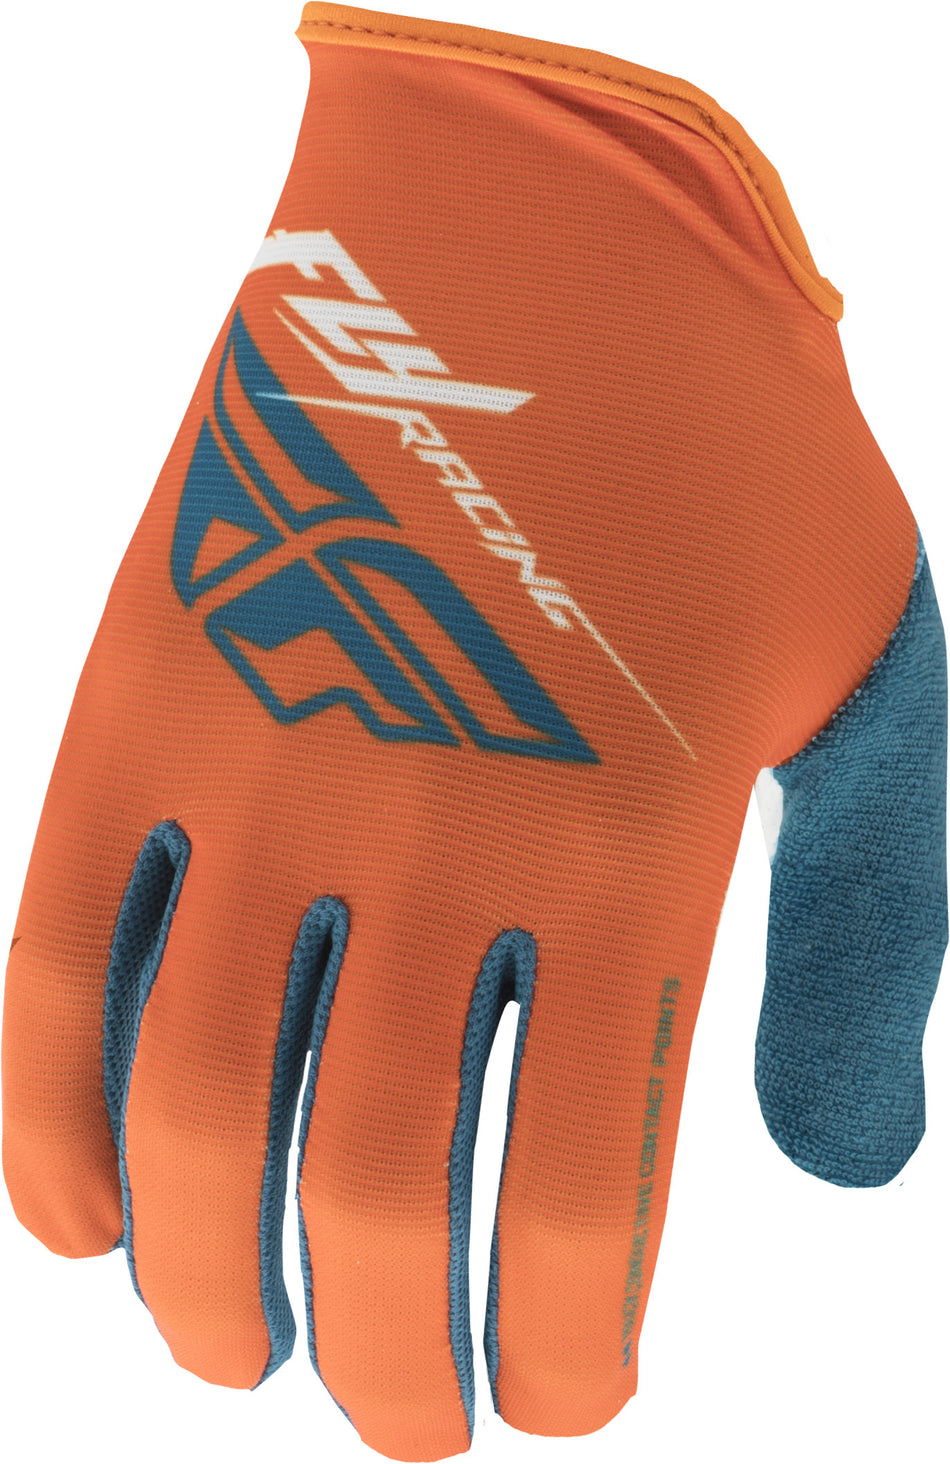 FLY RACING Media Gloves Orange/Teal/White Sz 09 350-09809